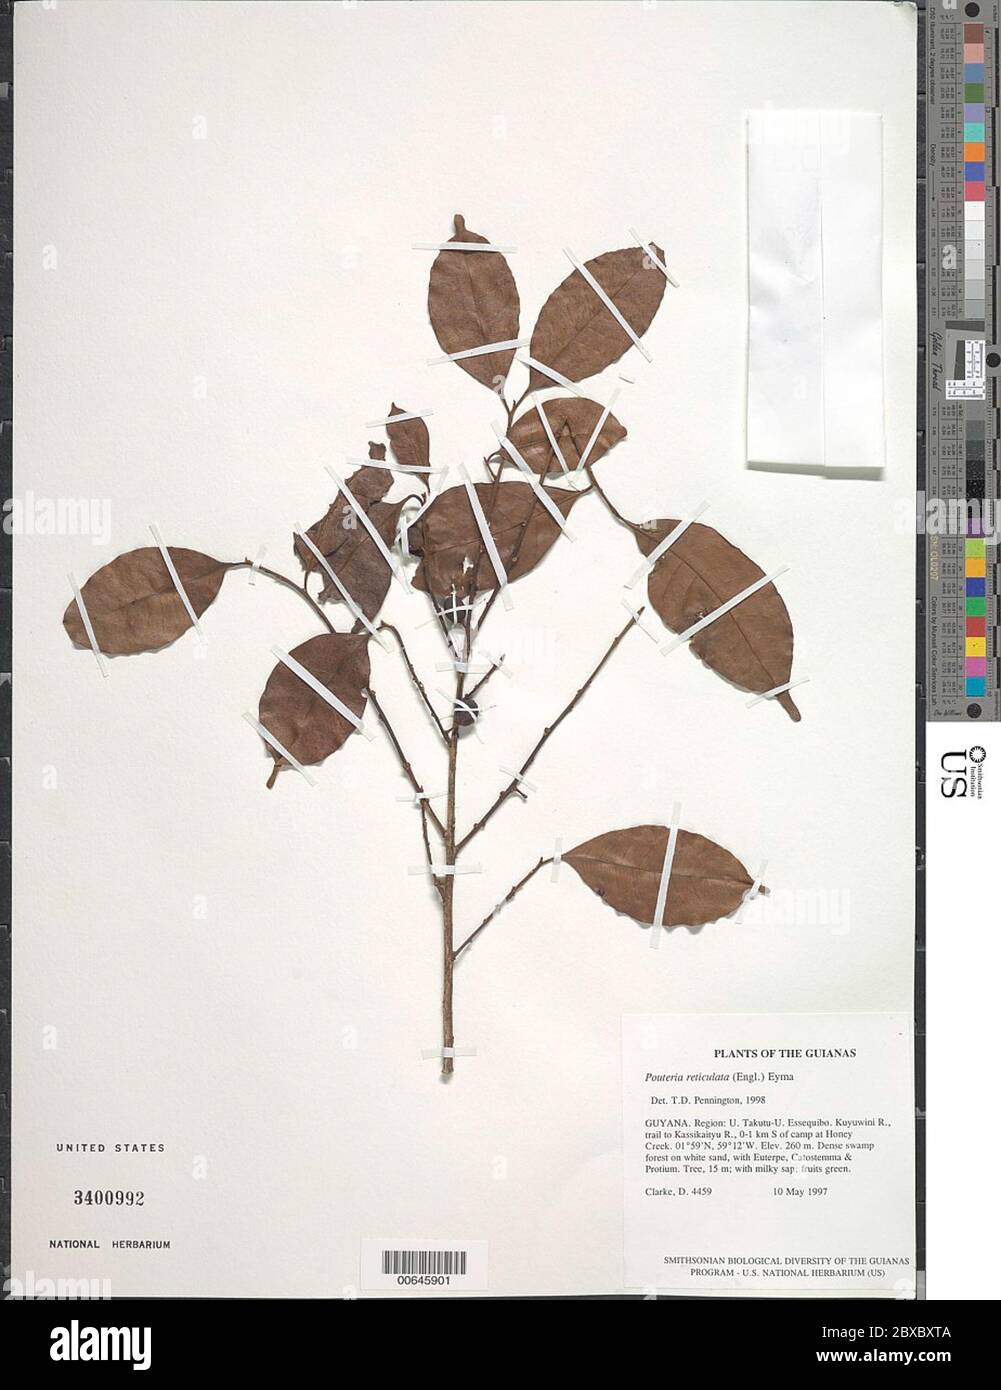 Pouteria reticulata Engl Eyma Pouteria reticulata Engl Eyma. Stock Photo